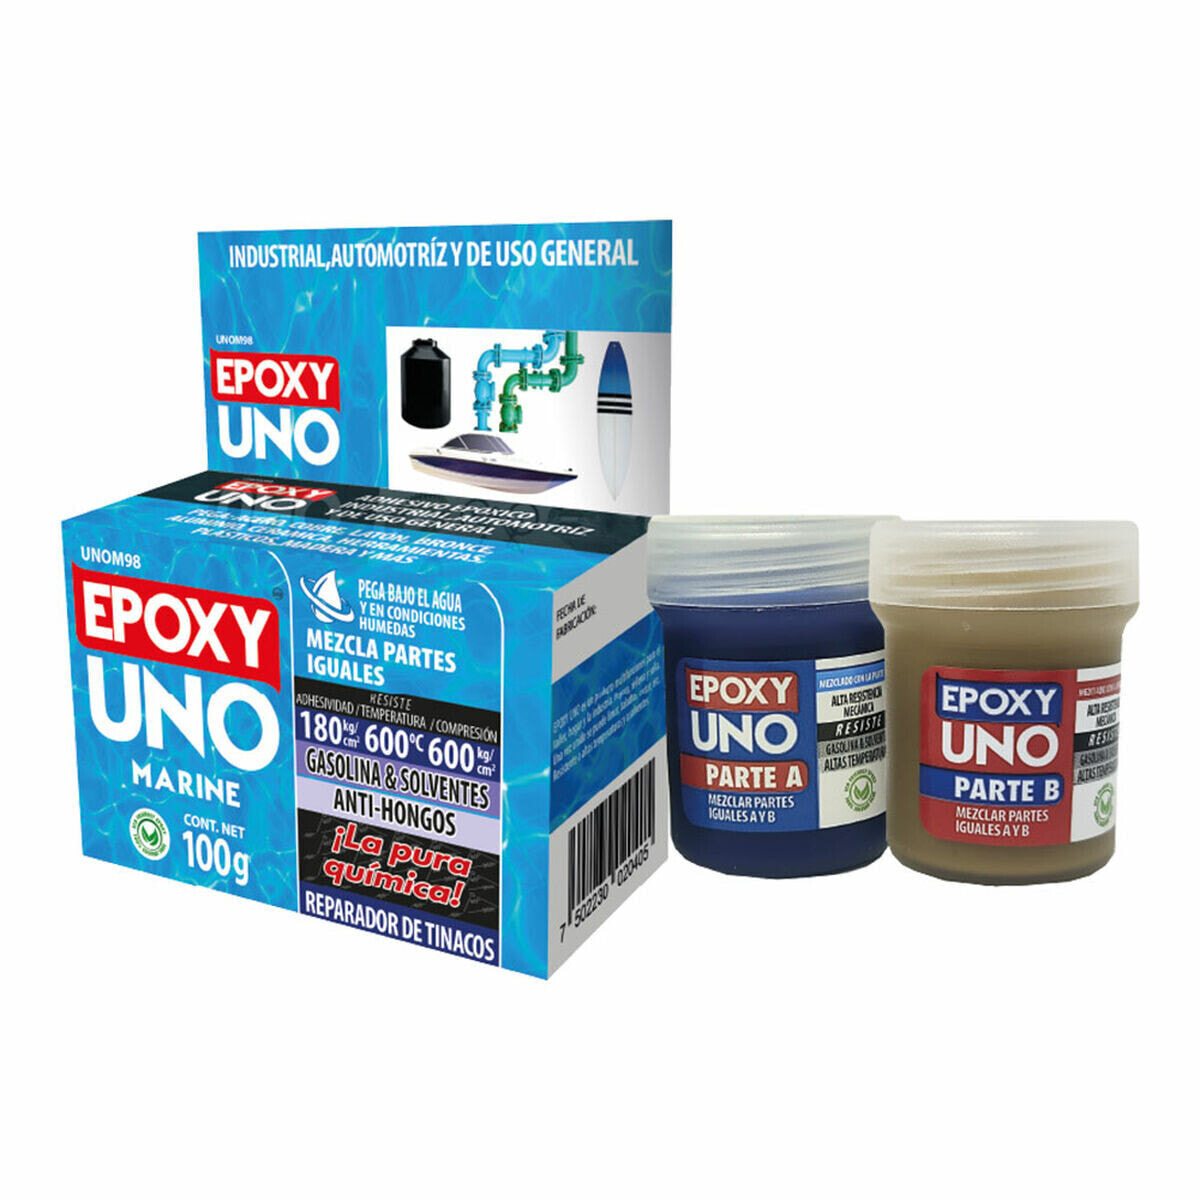 Two component epoxy adhesive Fusion Epoxy Black Label Unom98 Universal Navy Blue 100 g